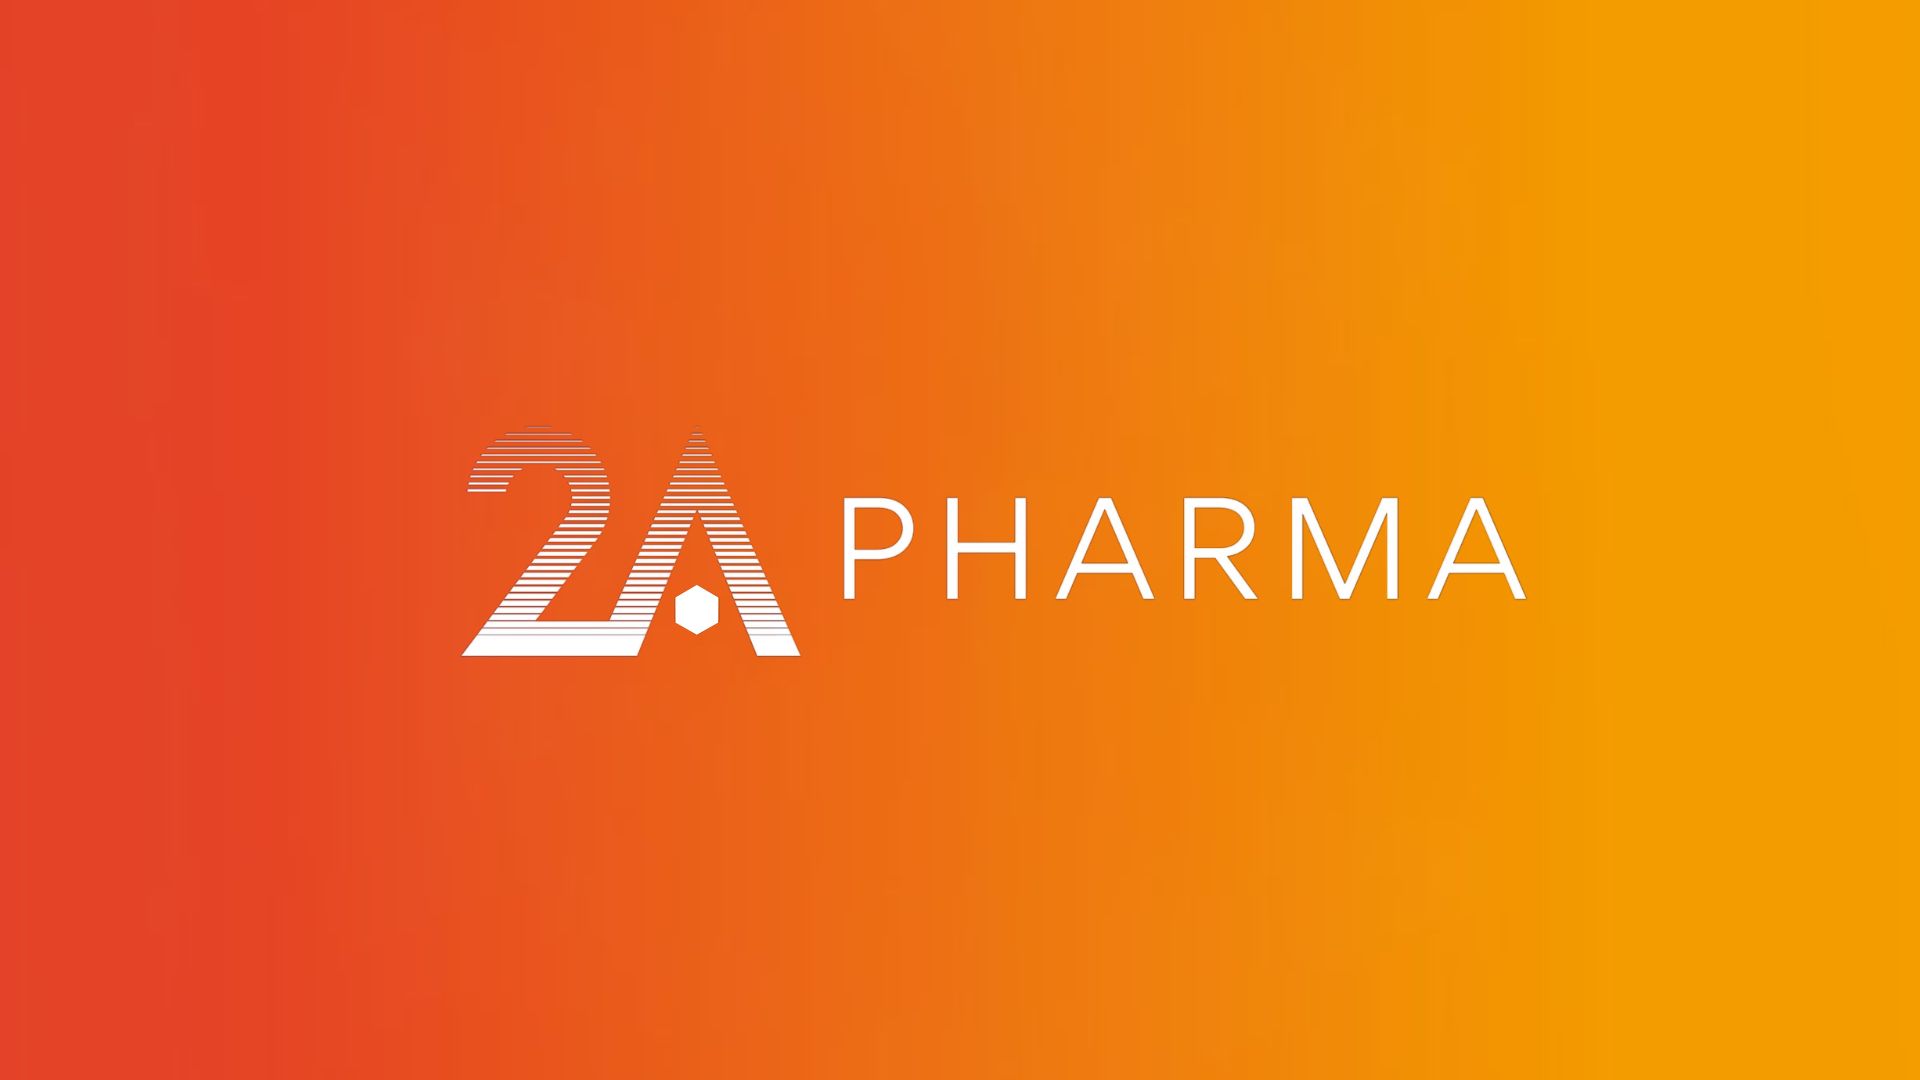 2A Pharma secures SEK 20 million of funding